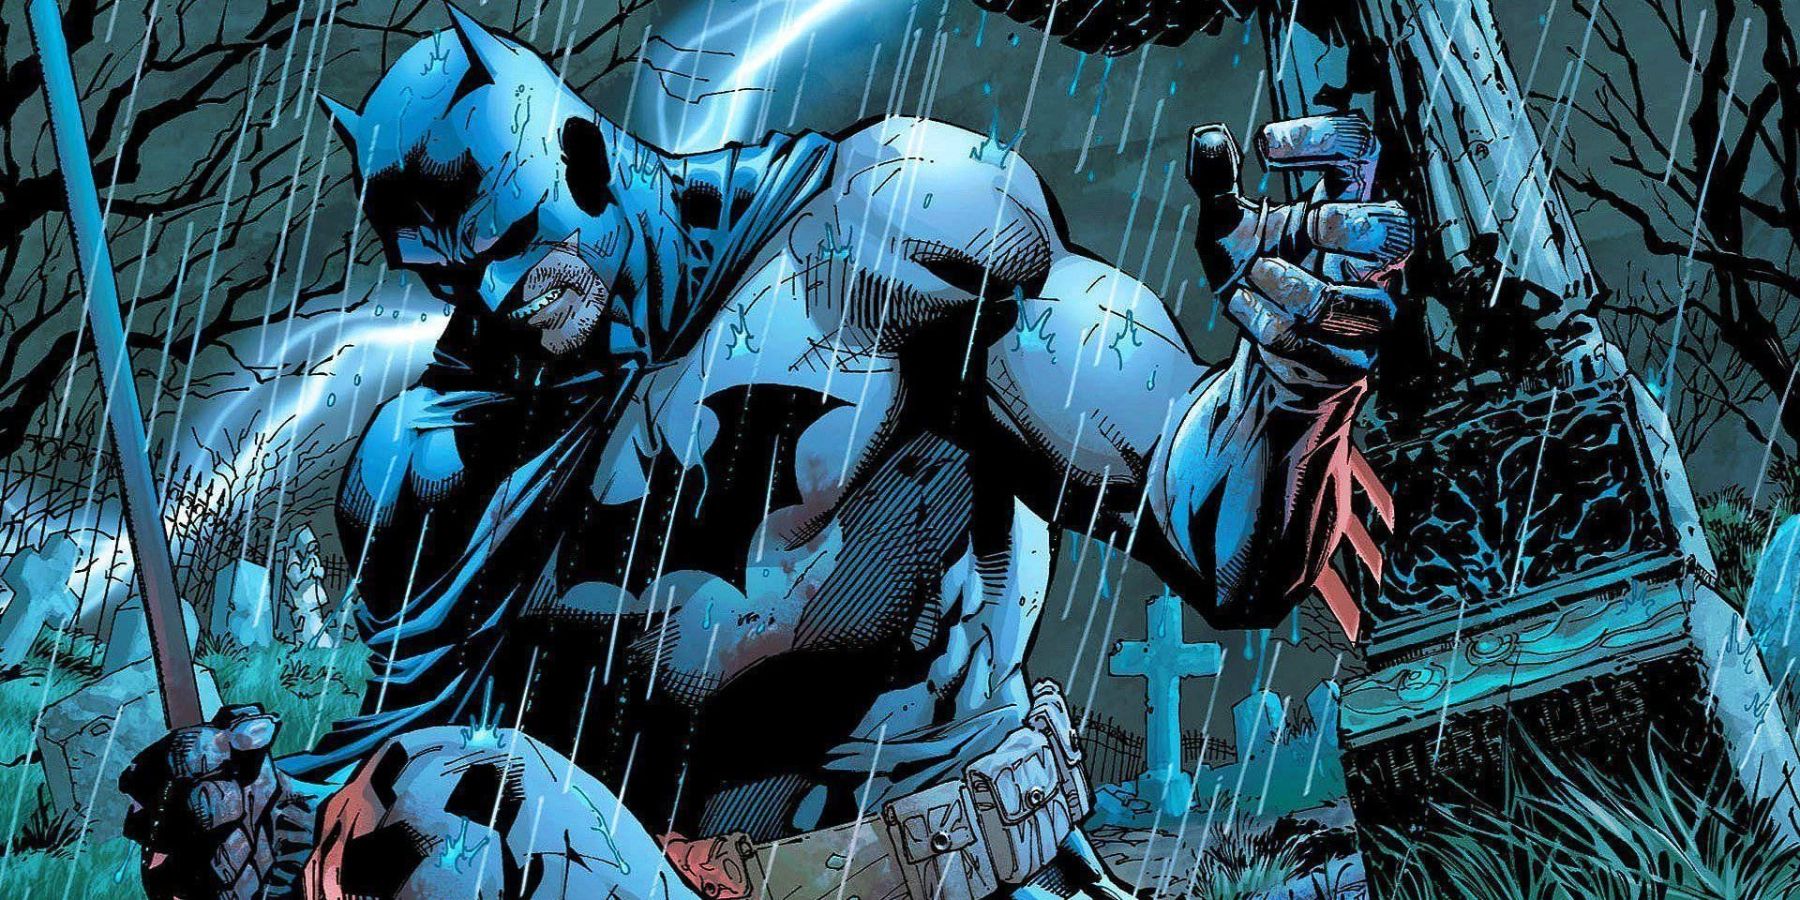 Jim Lee's Batman kneels down in a rainy graveyard in DC comics